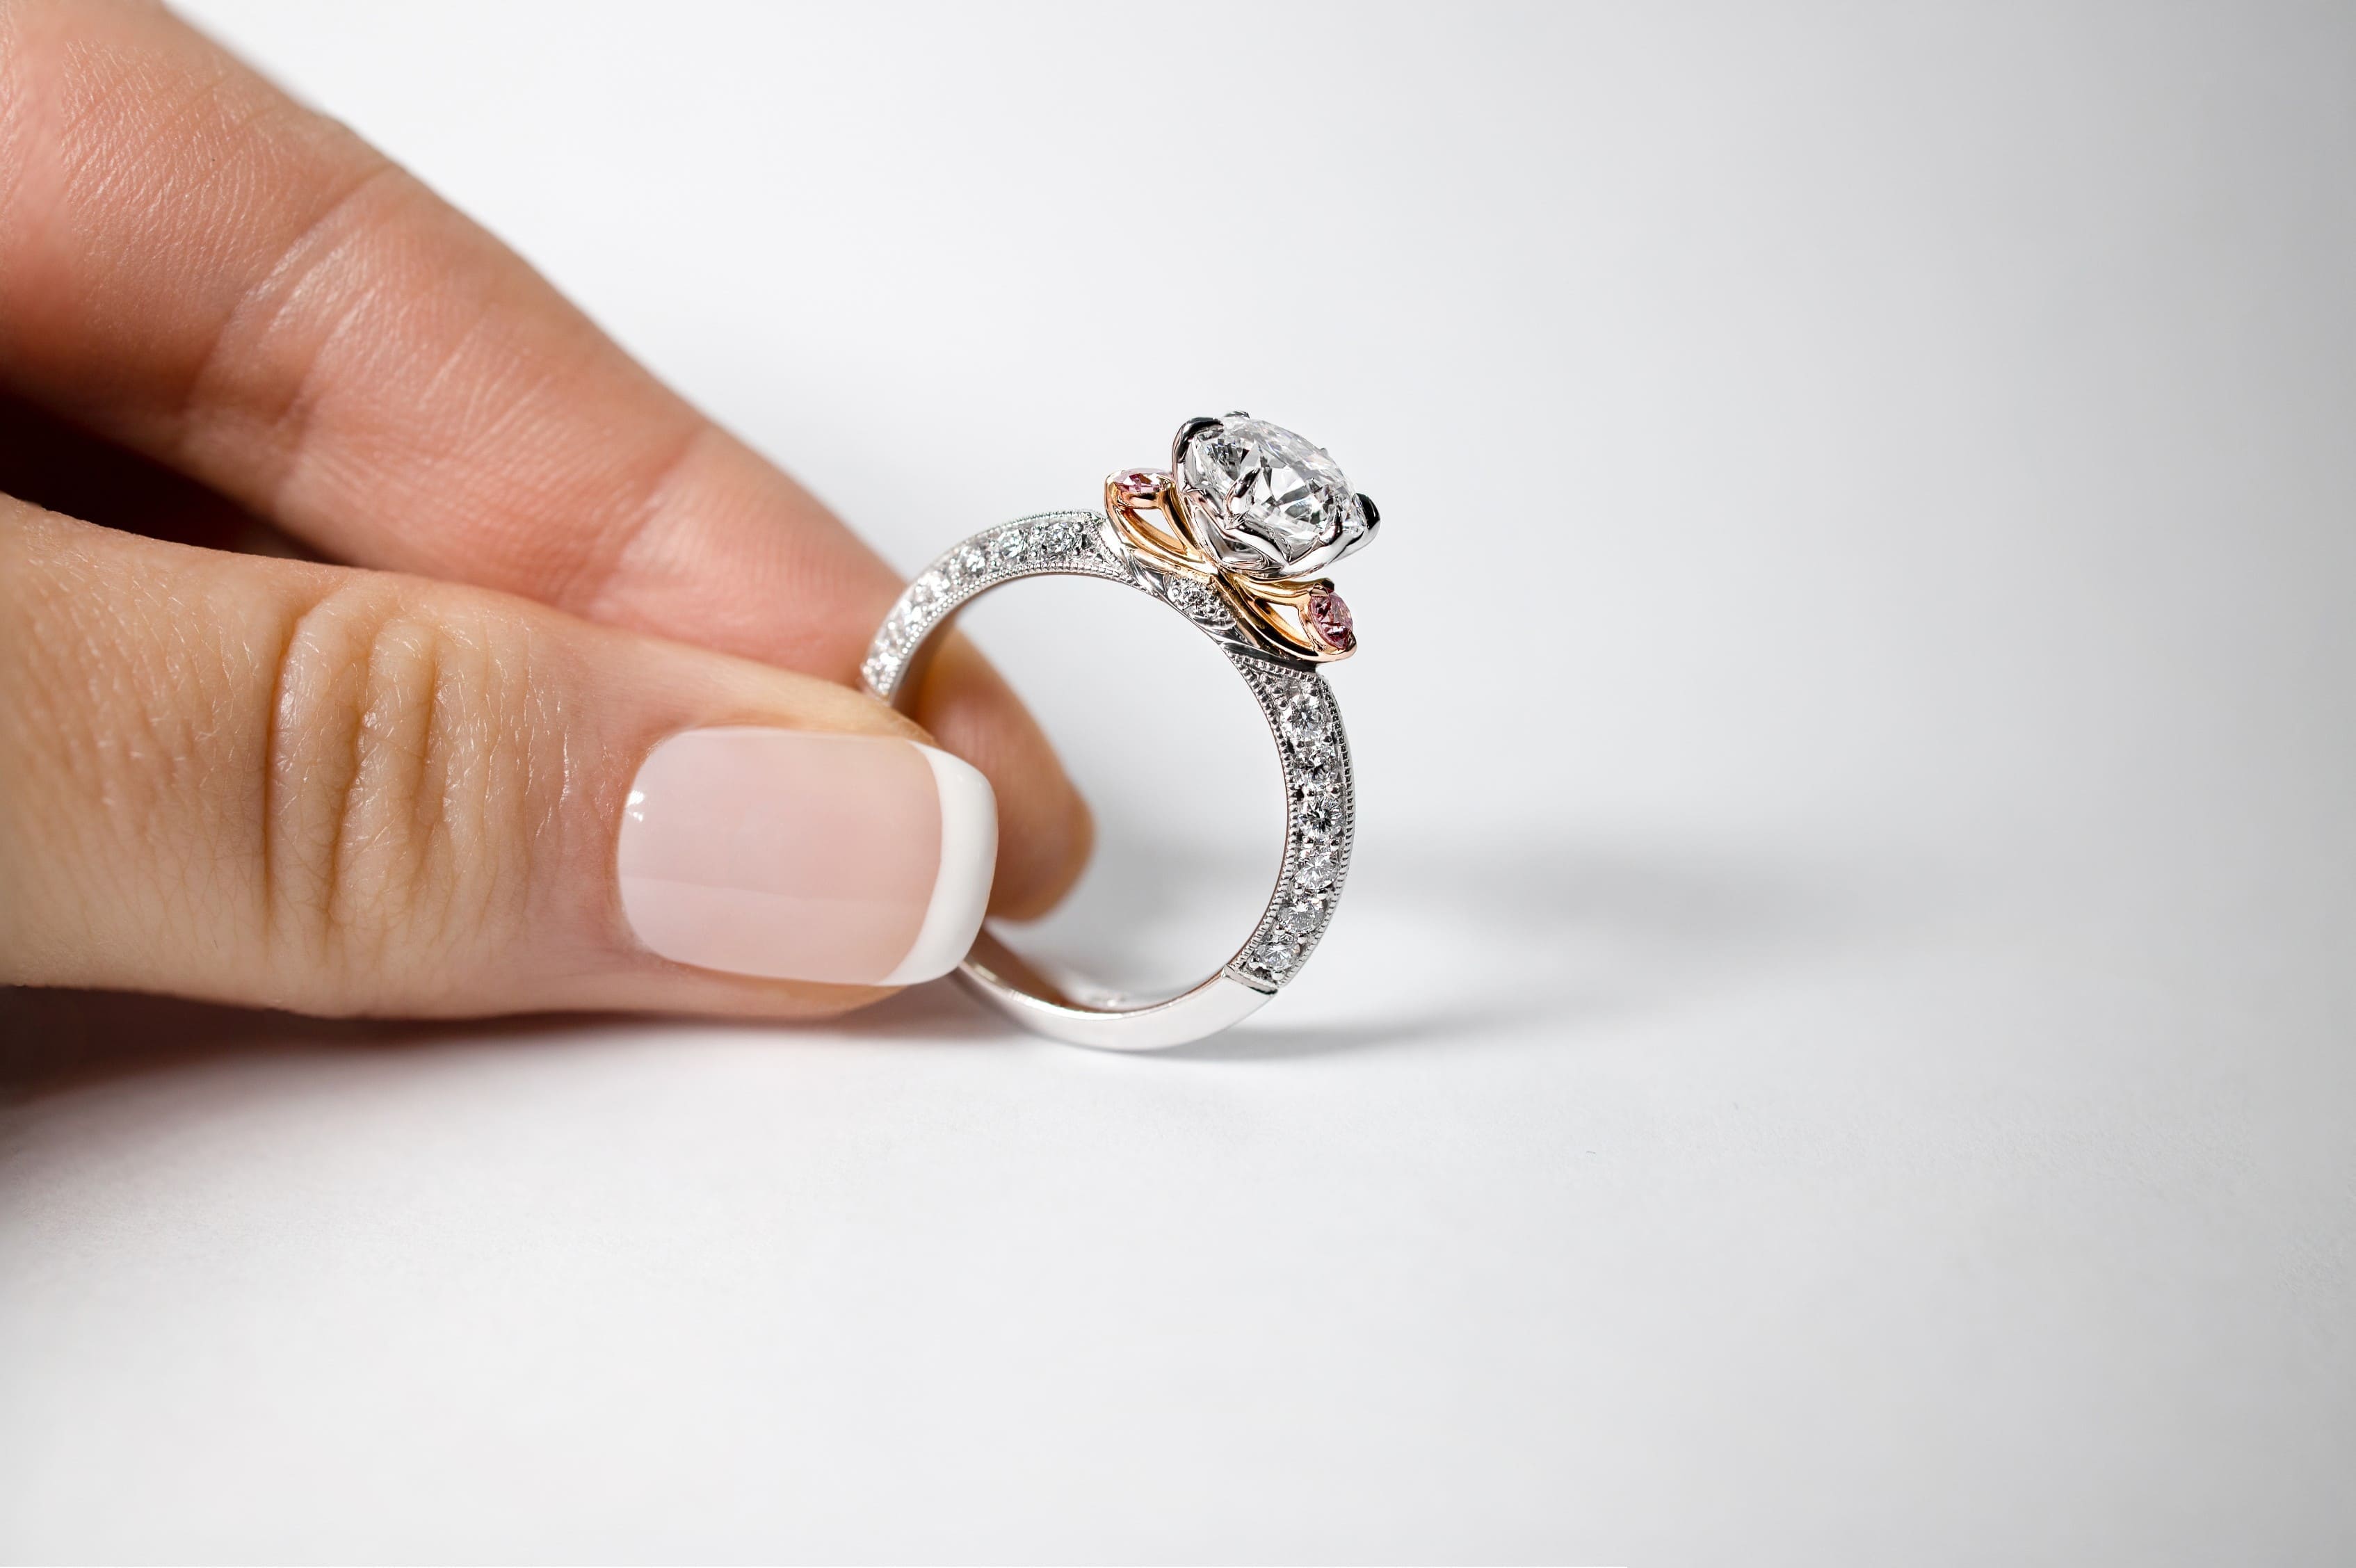 Queensland Engagement & Wedding Rings - Diamondport